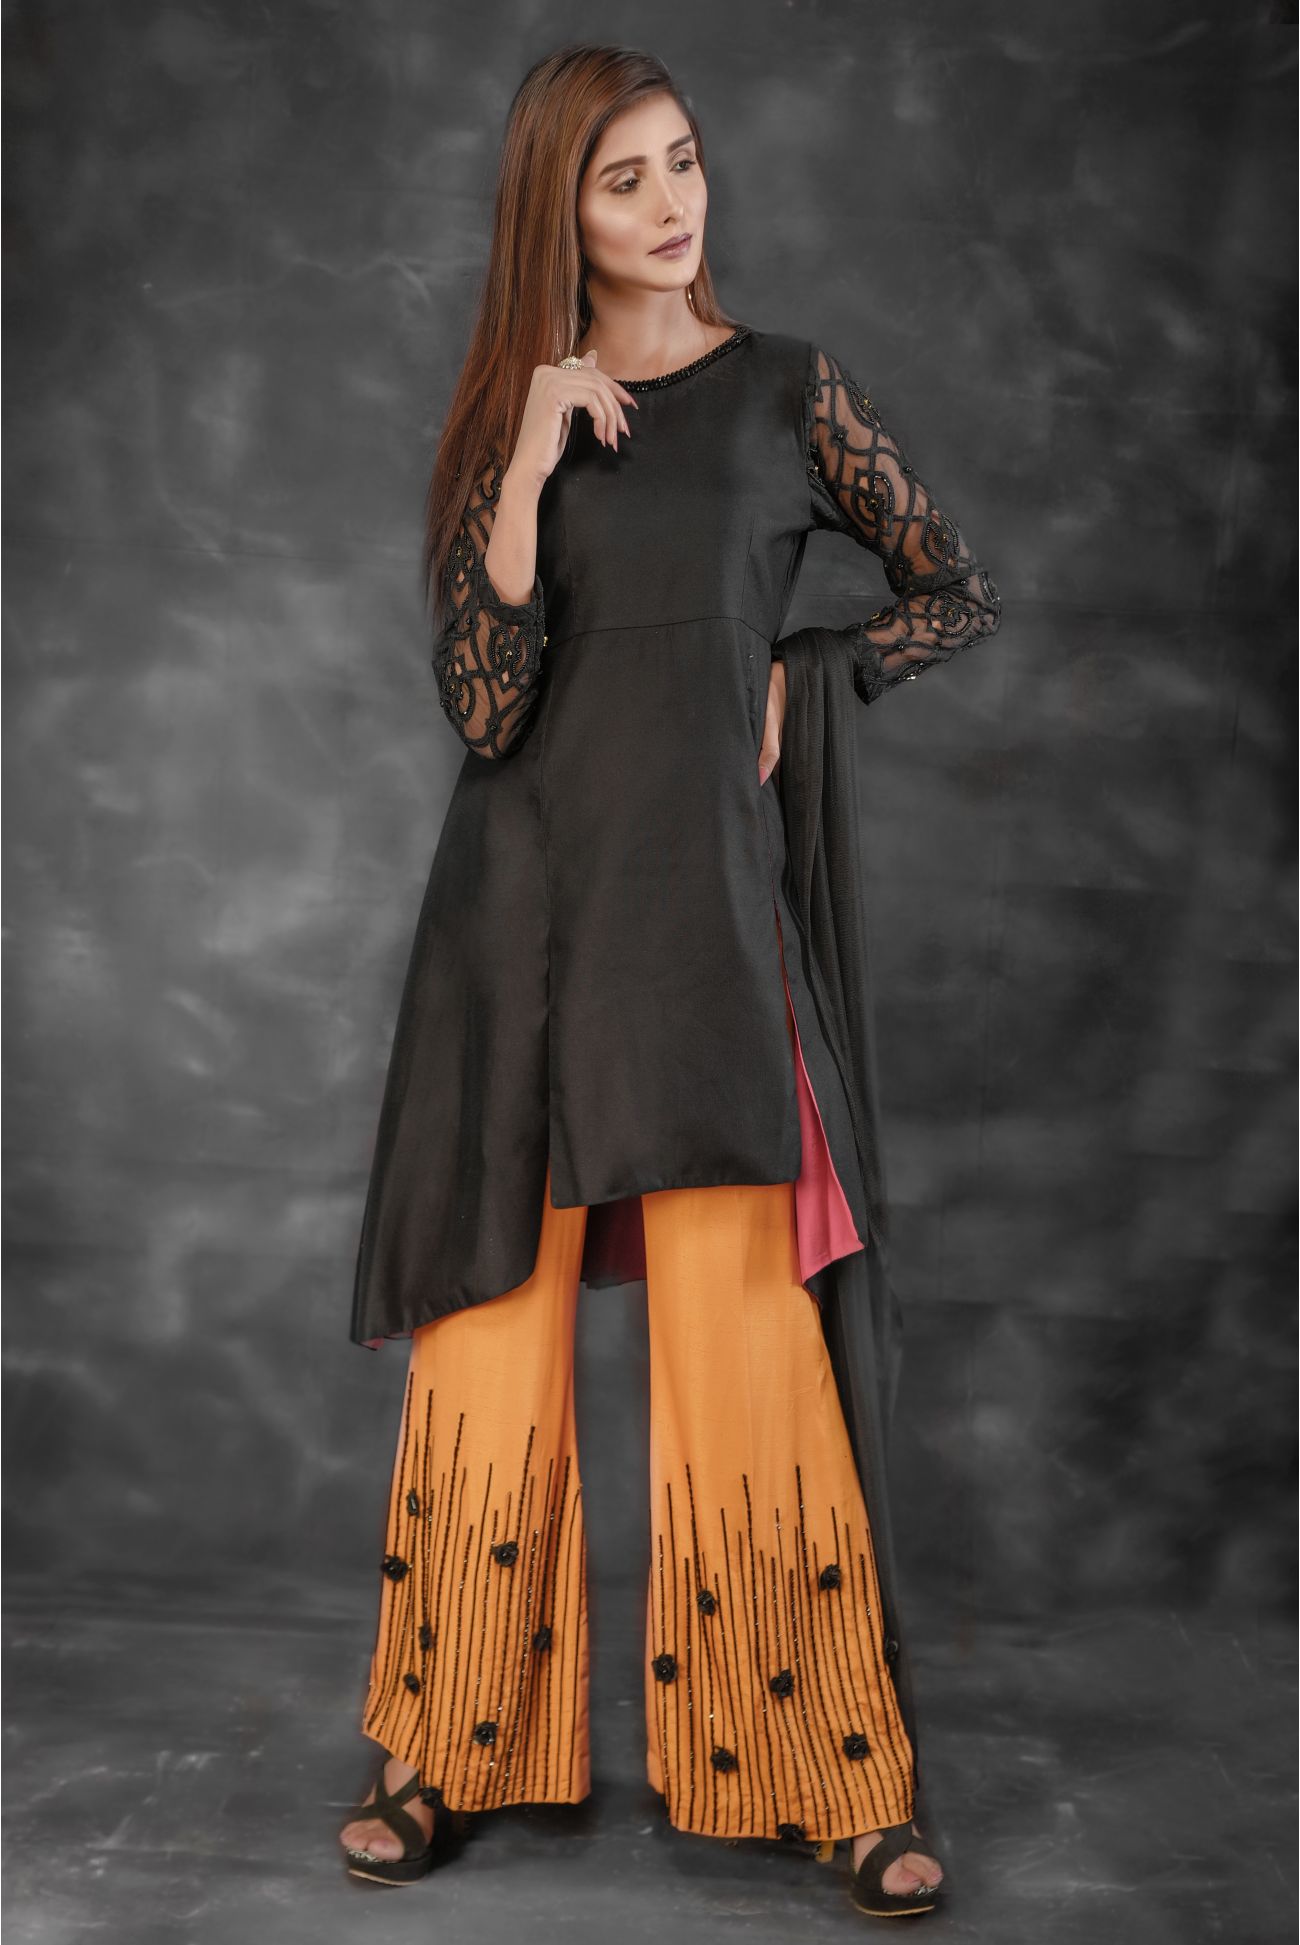 black pakistani dress